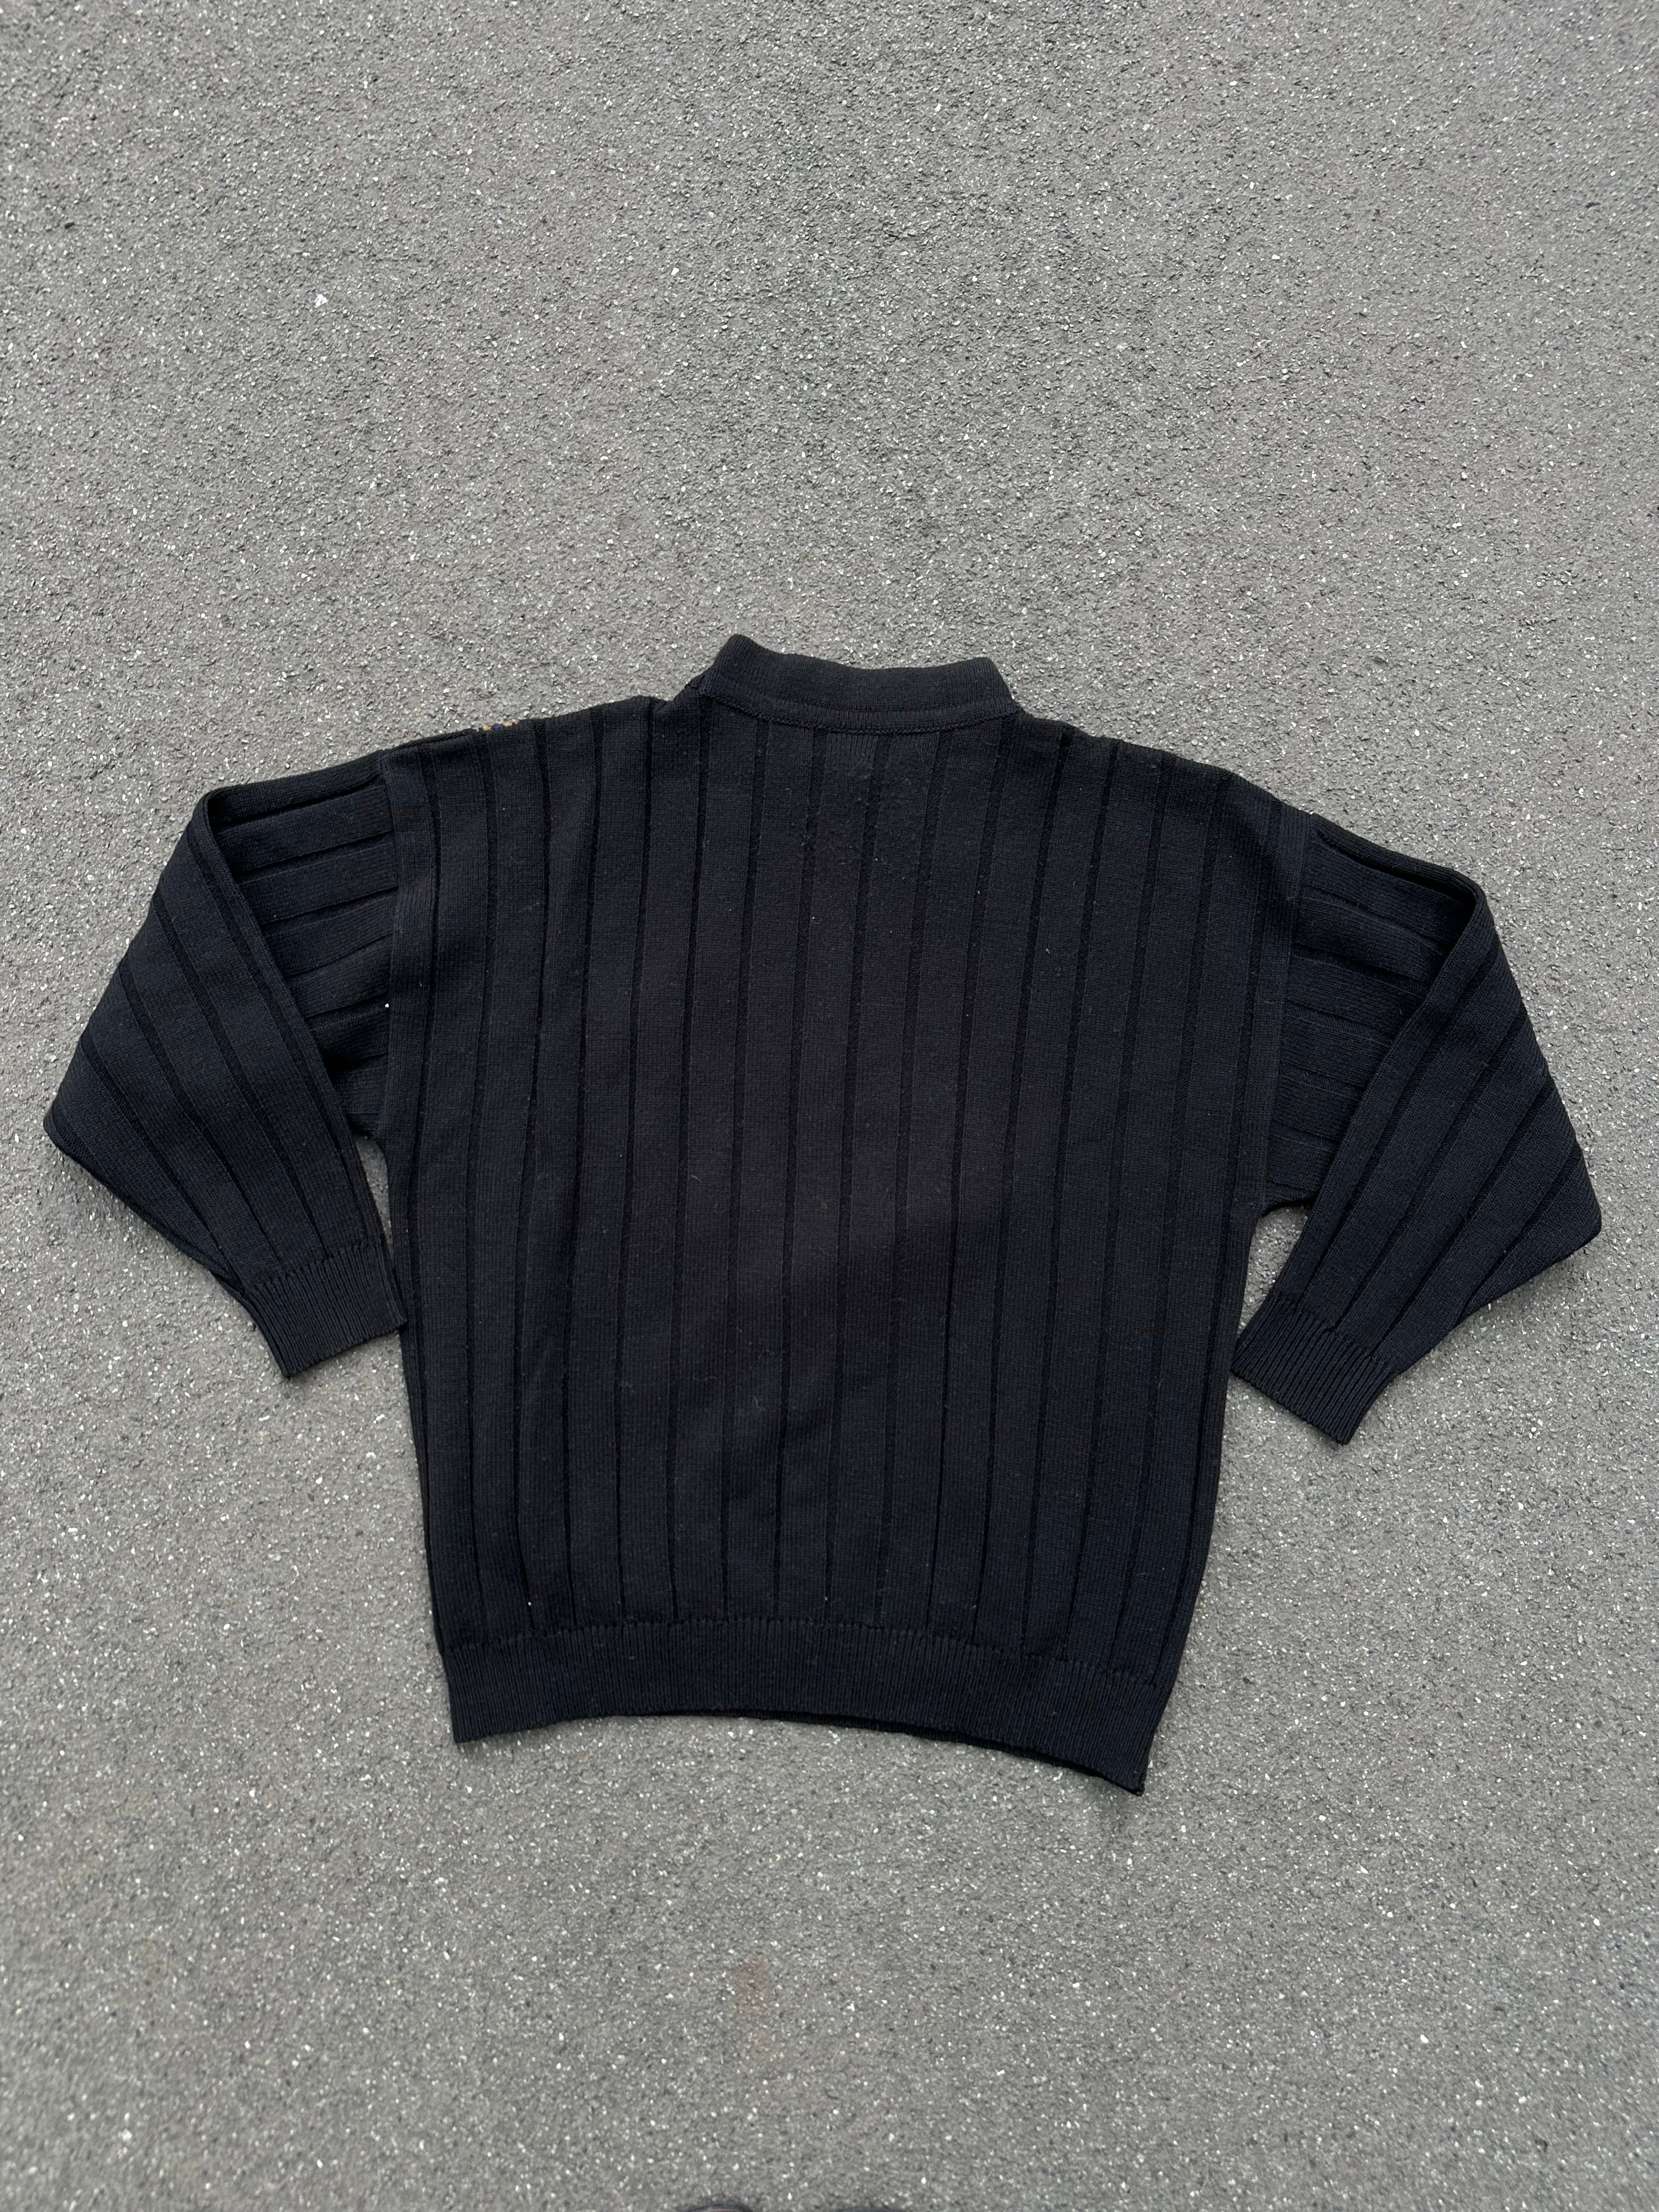 Knit Wildleather Sweater (L)